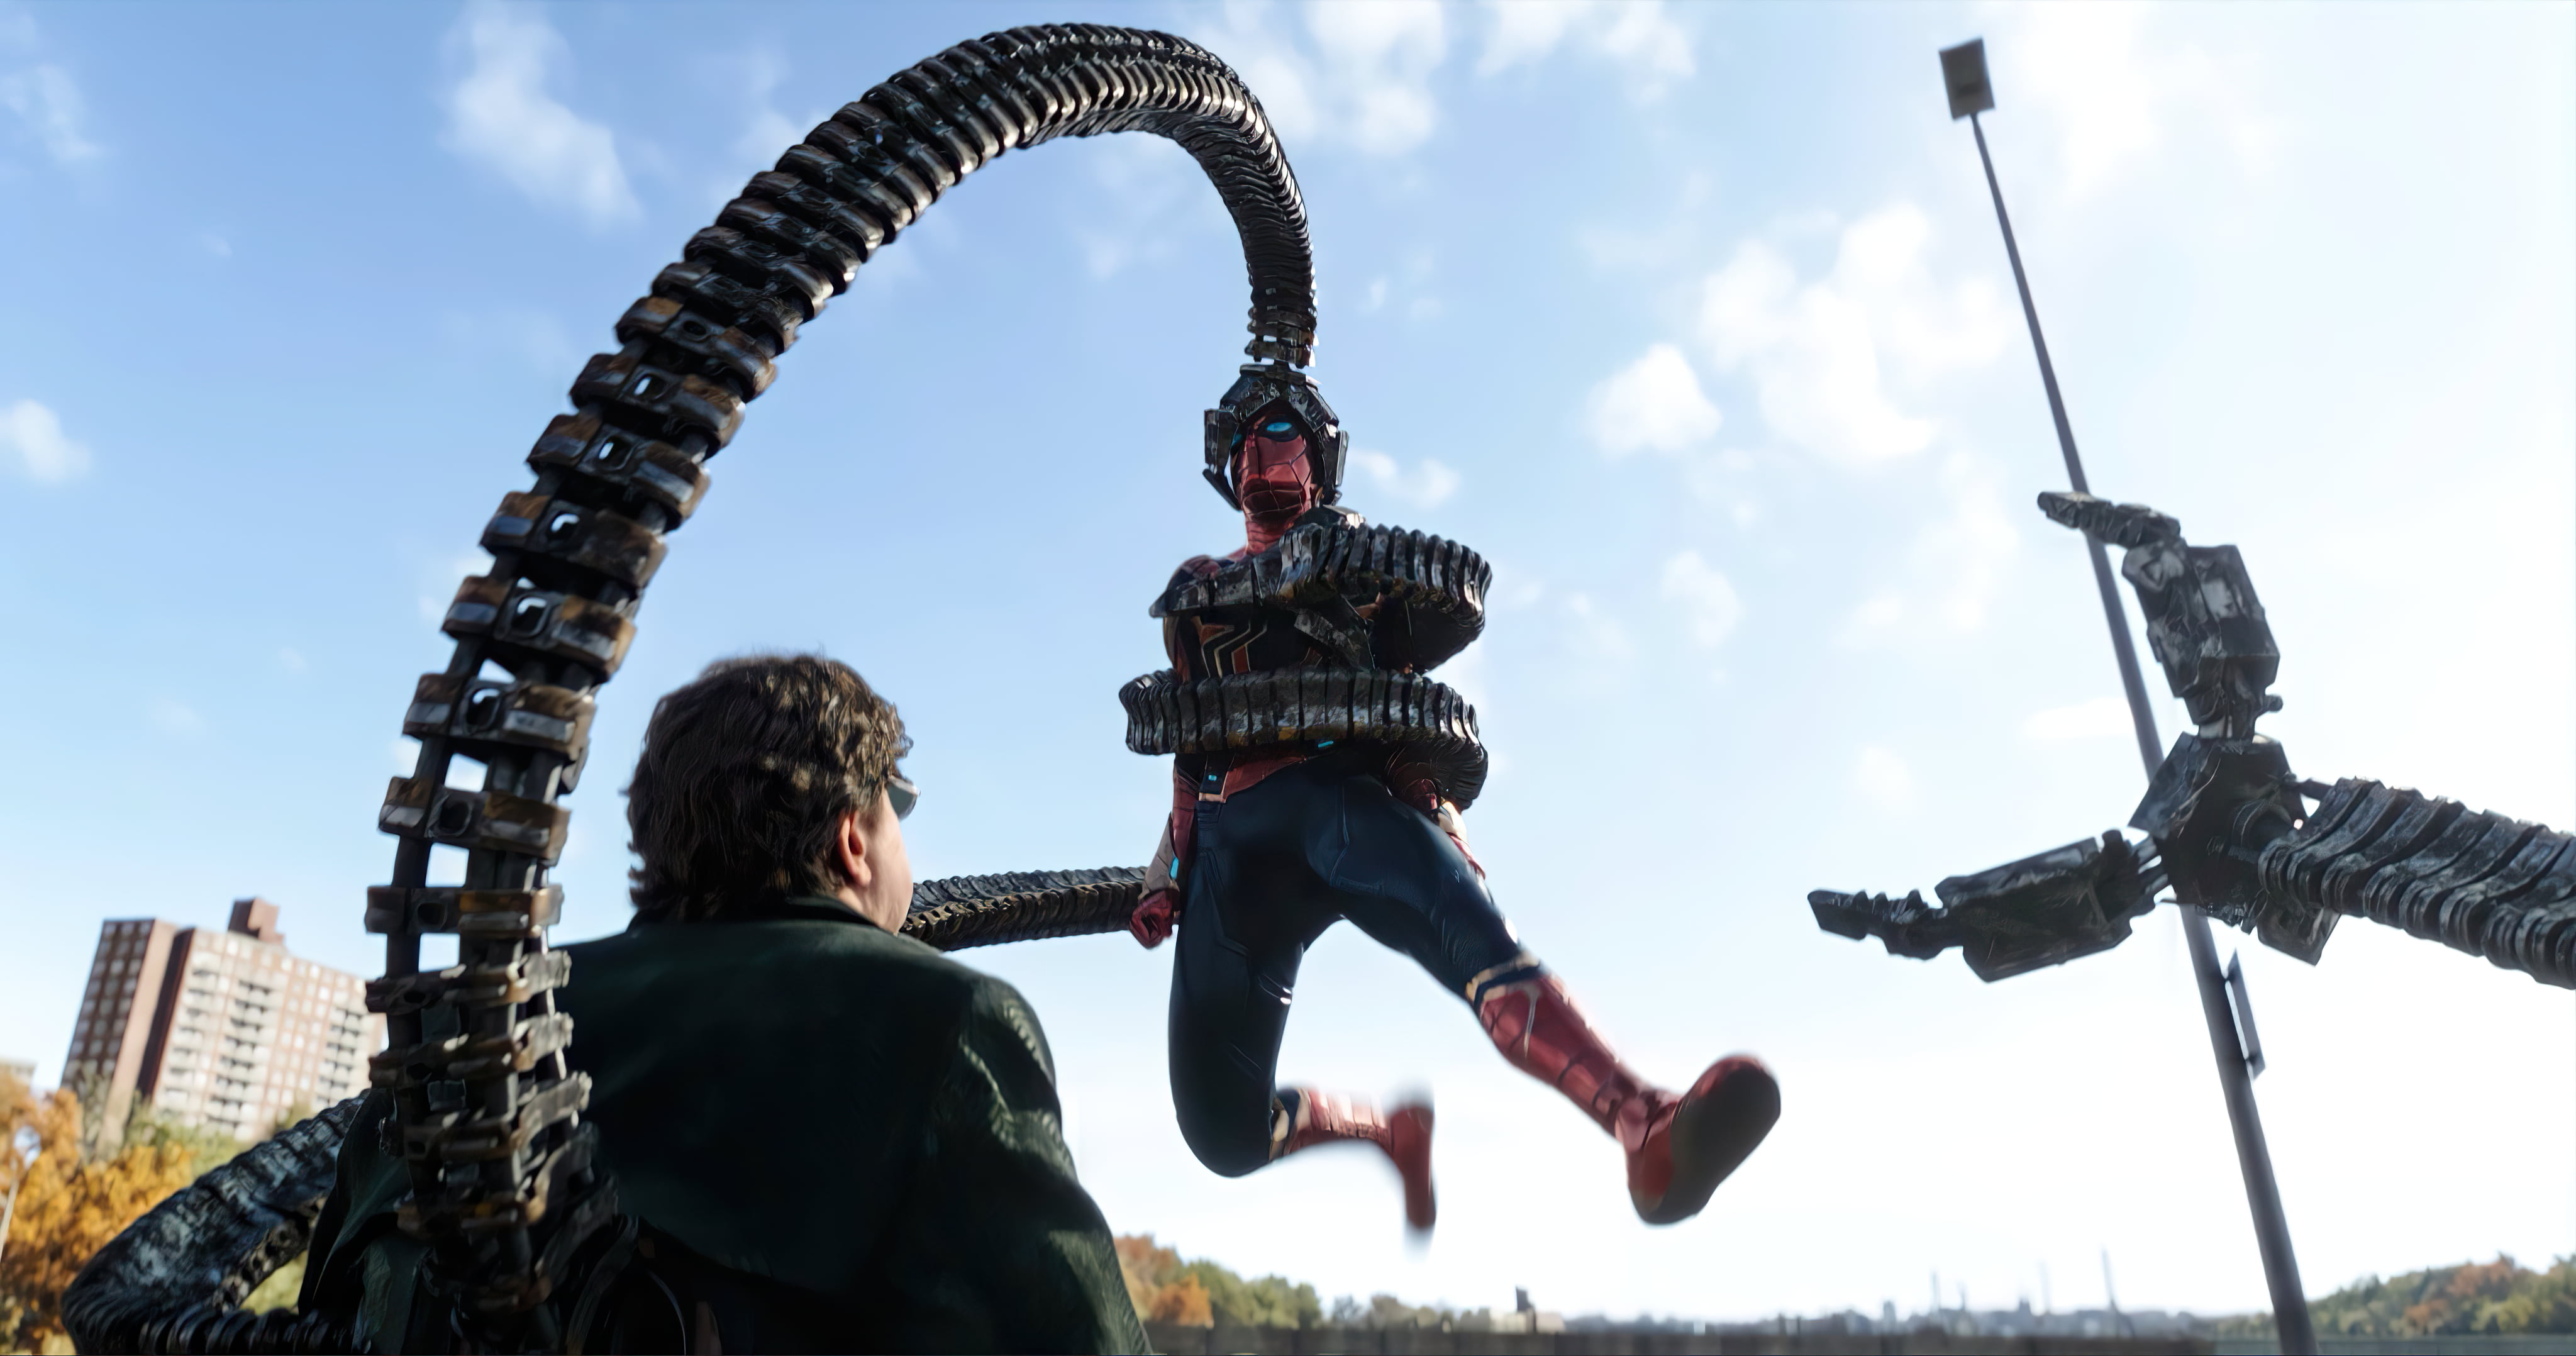 Spider-Man: No Way Home, Doctor octopus, tentacles, film stills